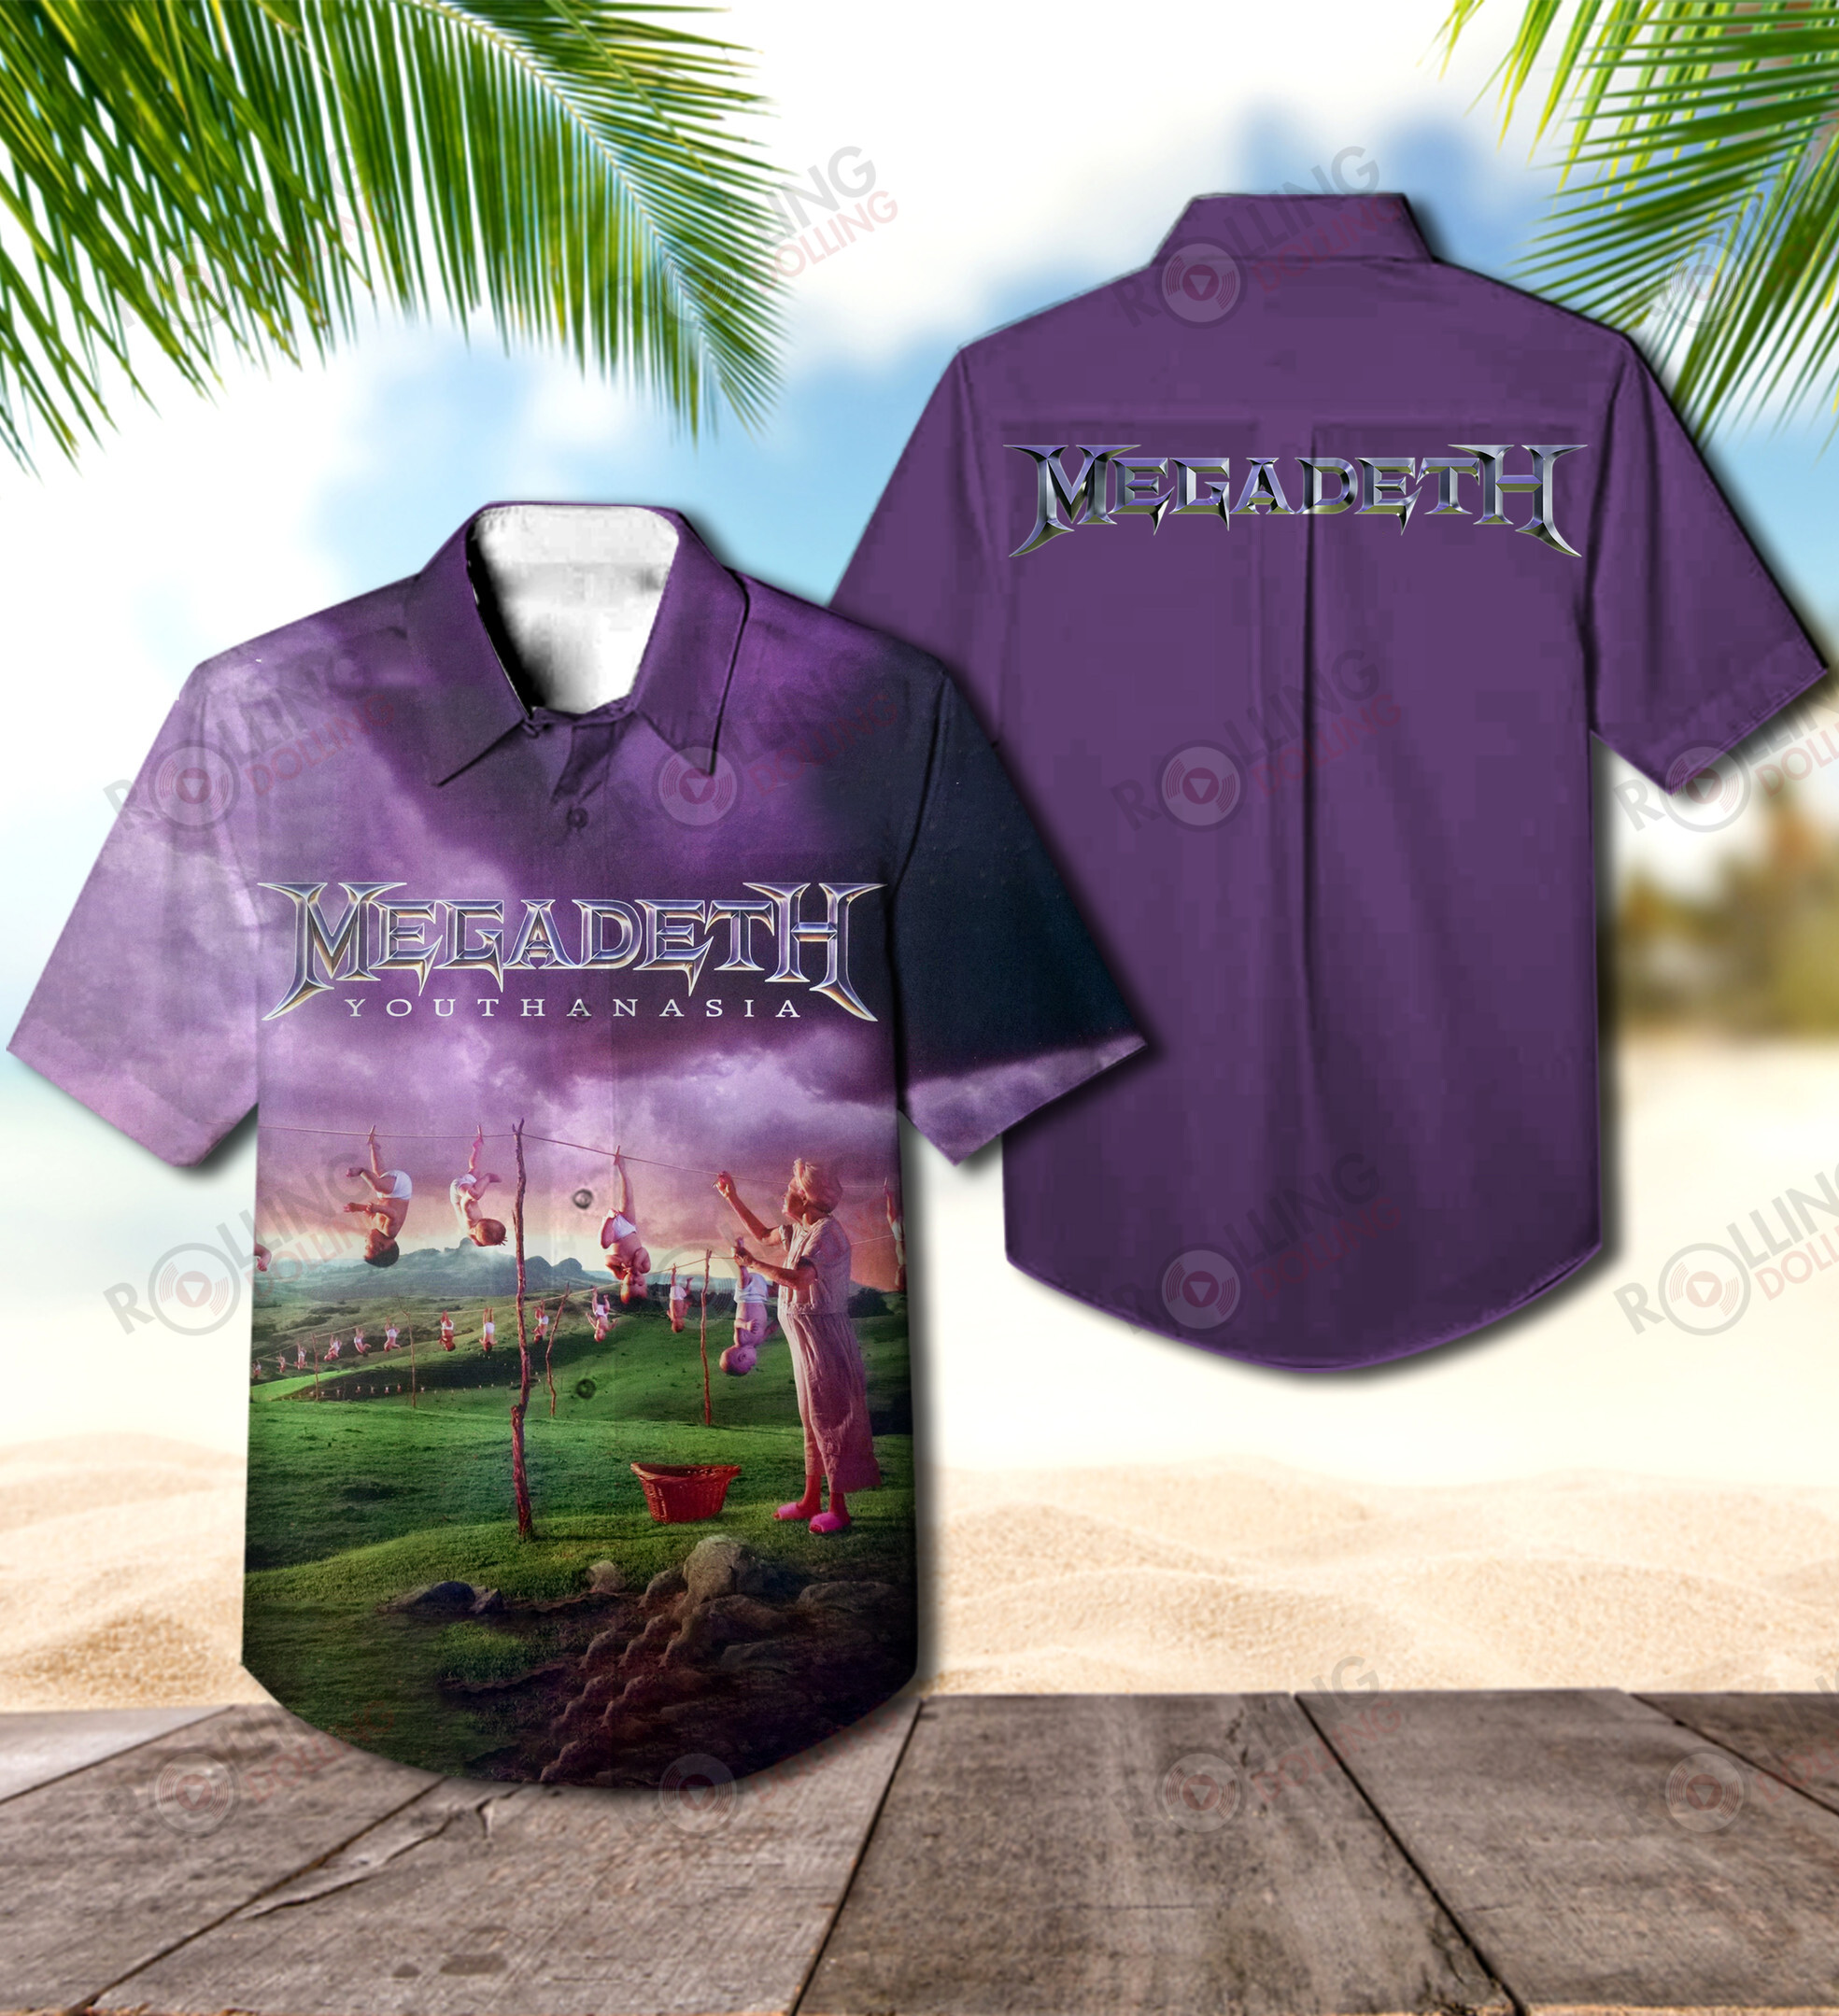 Regardless of their style, you will feel comfortable wearing Hawaiian Shirt 141